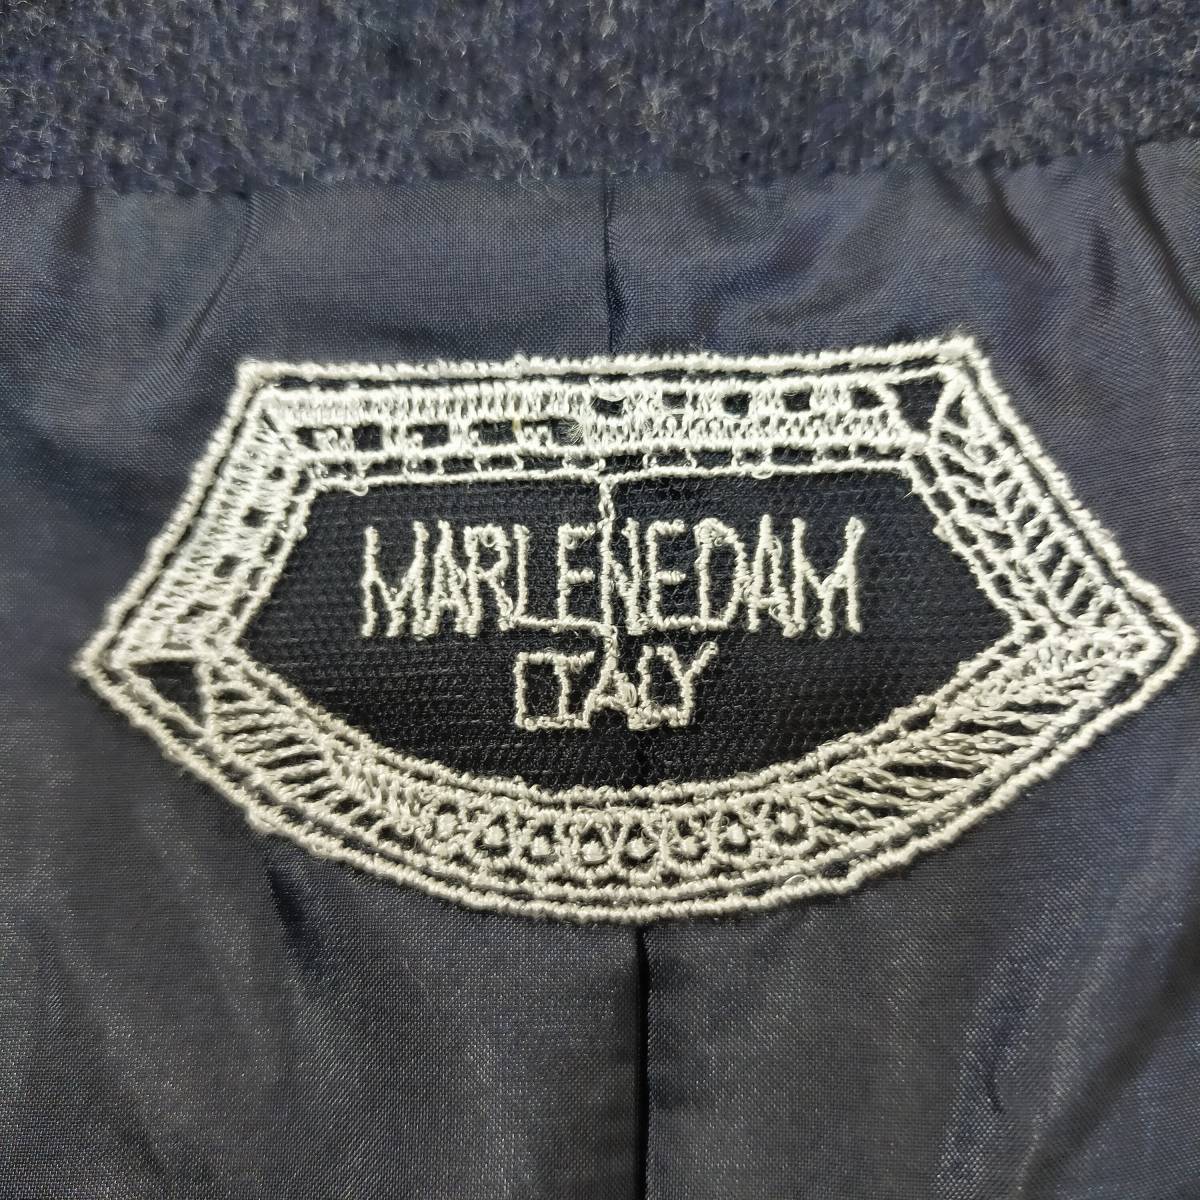 MARLENEDAM マーレンダム ショート丈ジャケット サイズ42 XL グレー 日本製 羊毛 襟付き 長袖 シンプル ポケット フルジップ 3262